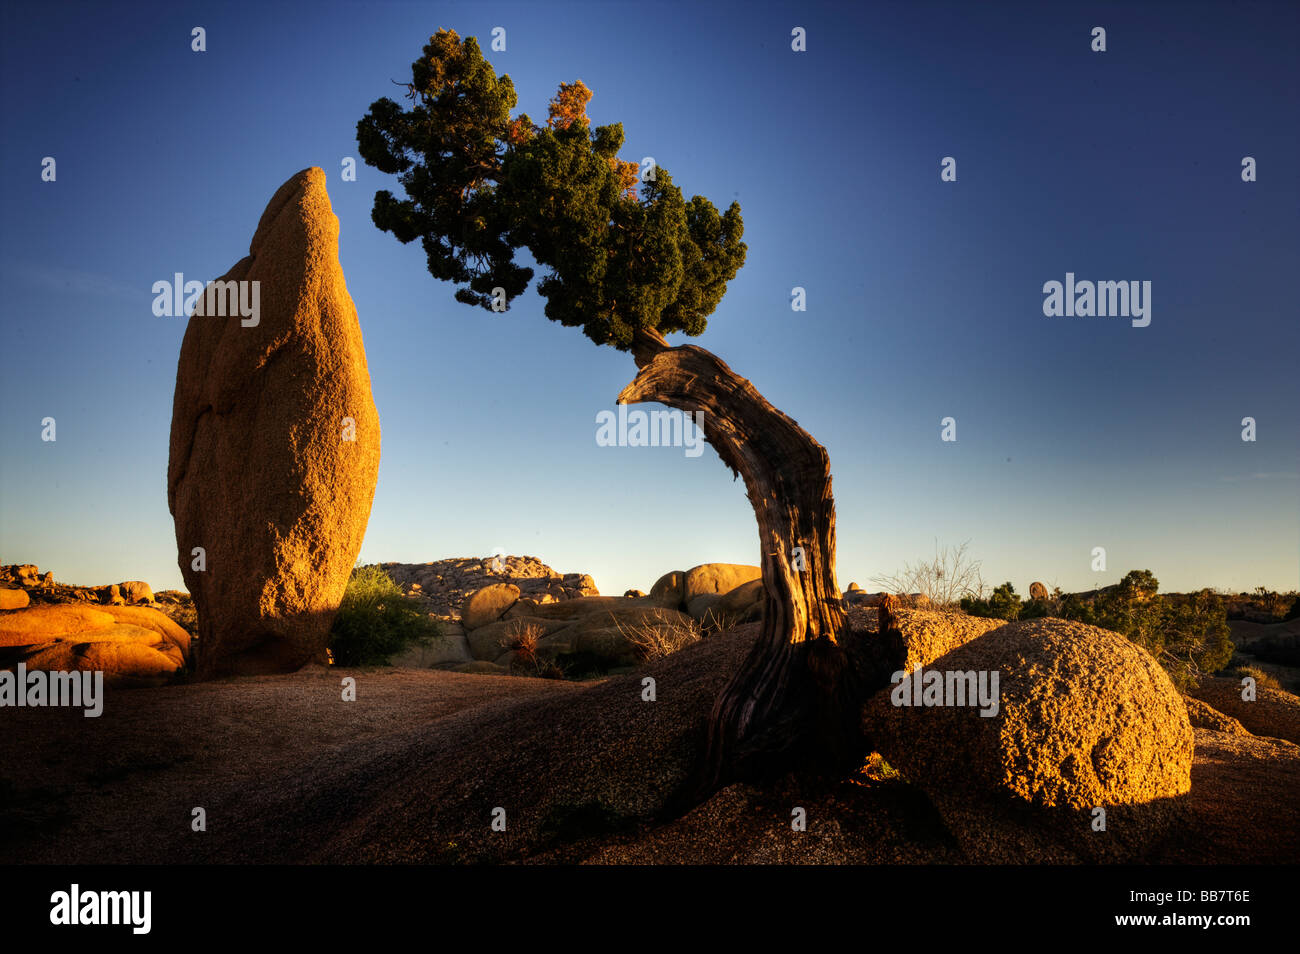 Juniper Tree And Conical Rock At Jumbo Rocks In Joshue Tree National